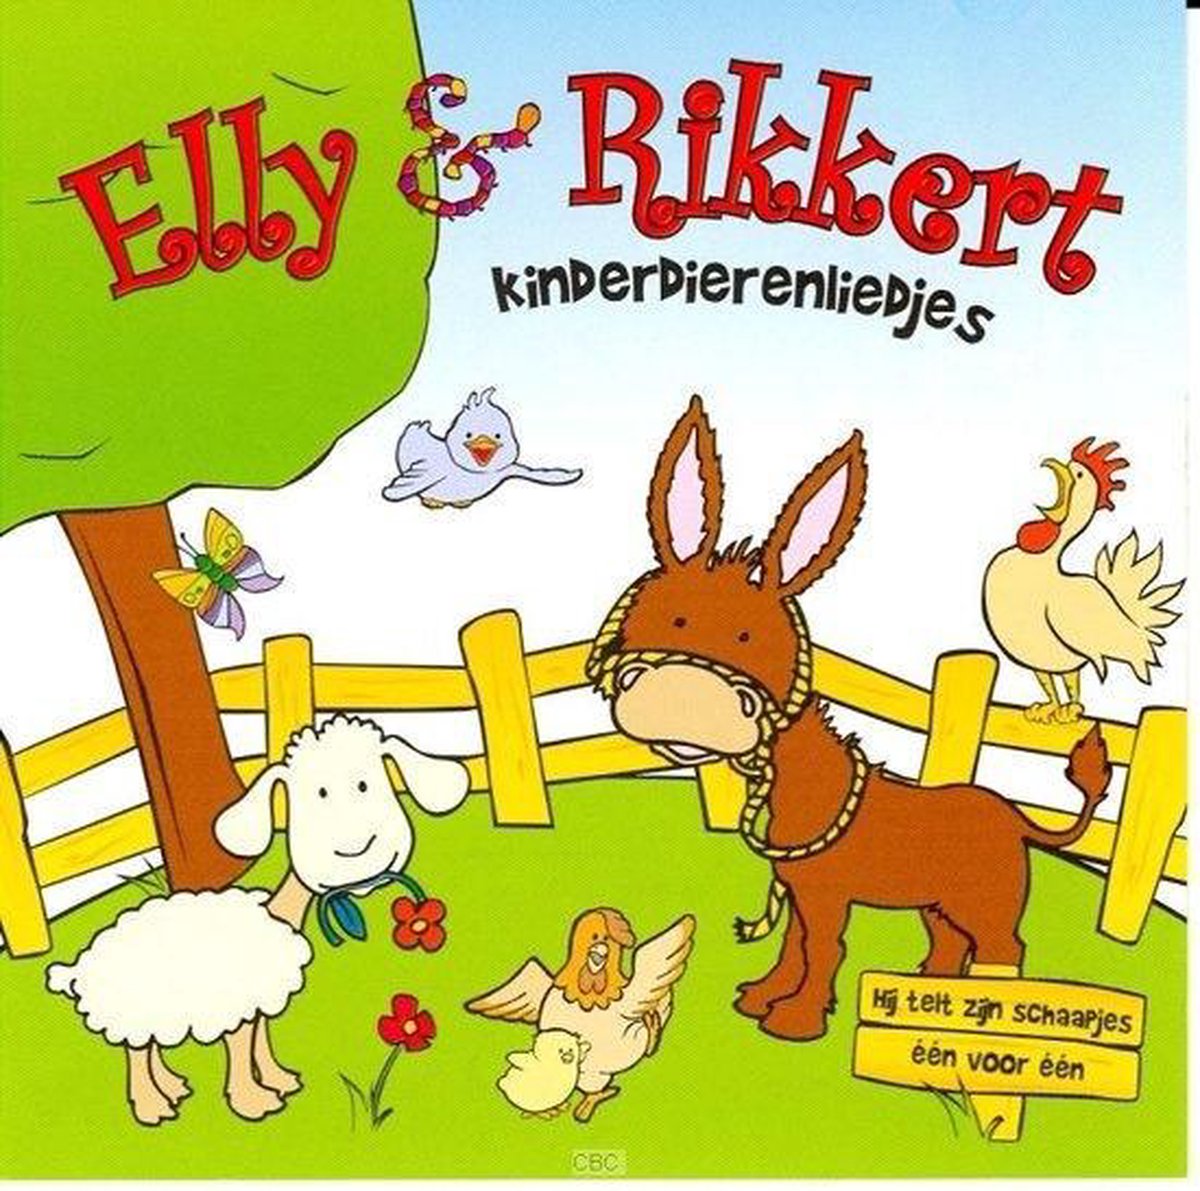 Elly & Rikkert - Kinderdierenliedjes